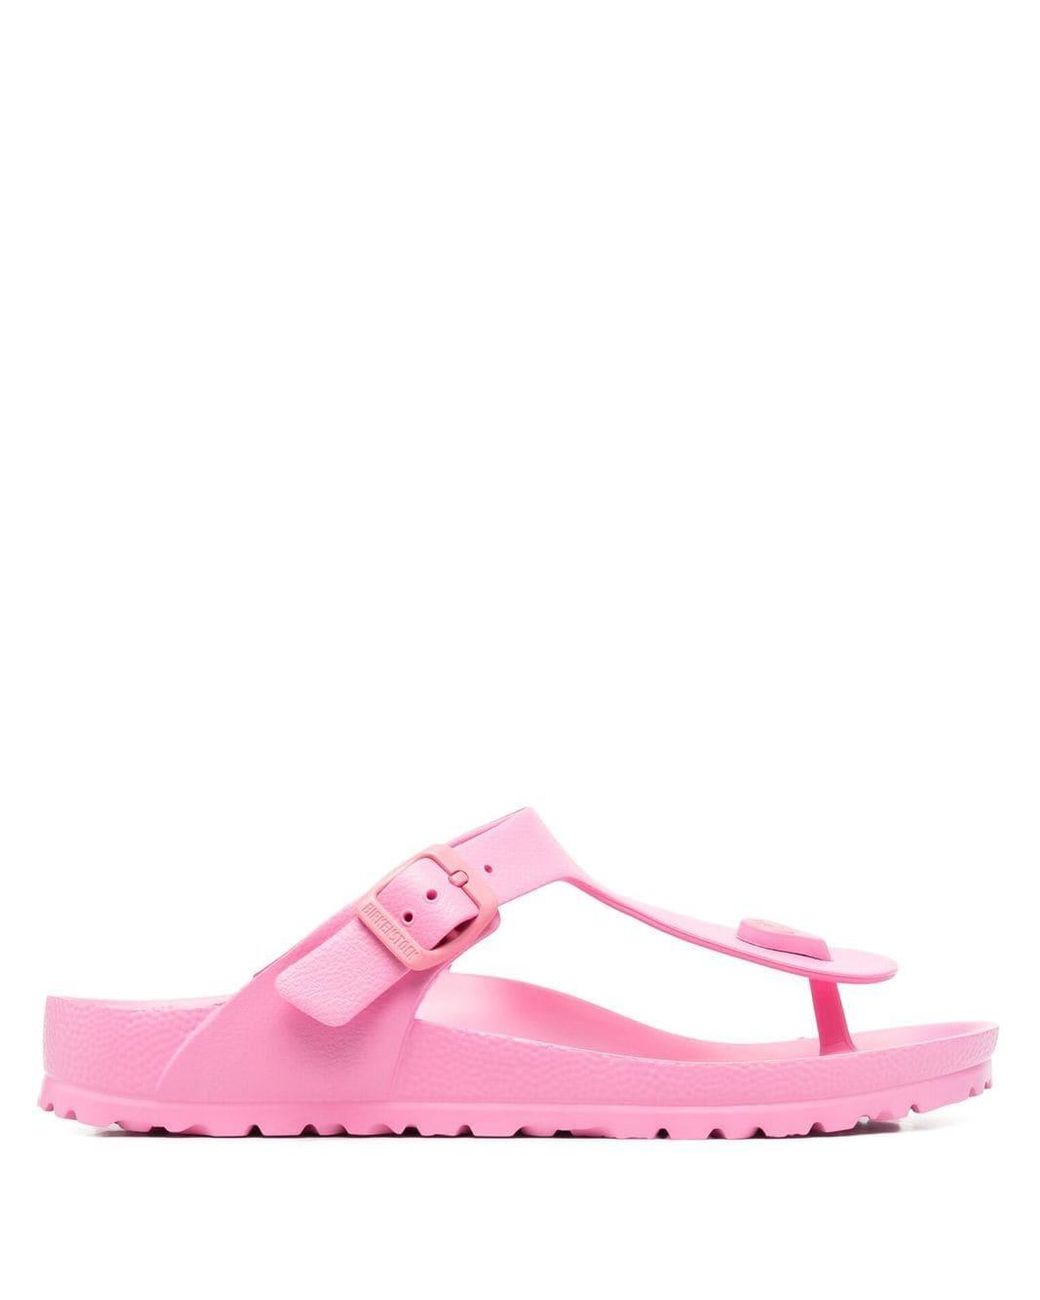 Birkenstock Gizeh Eva Thong Sandals in Pink | Lyst